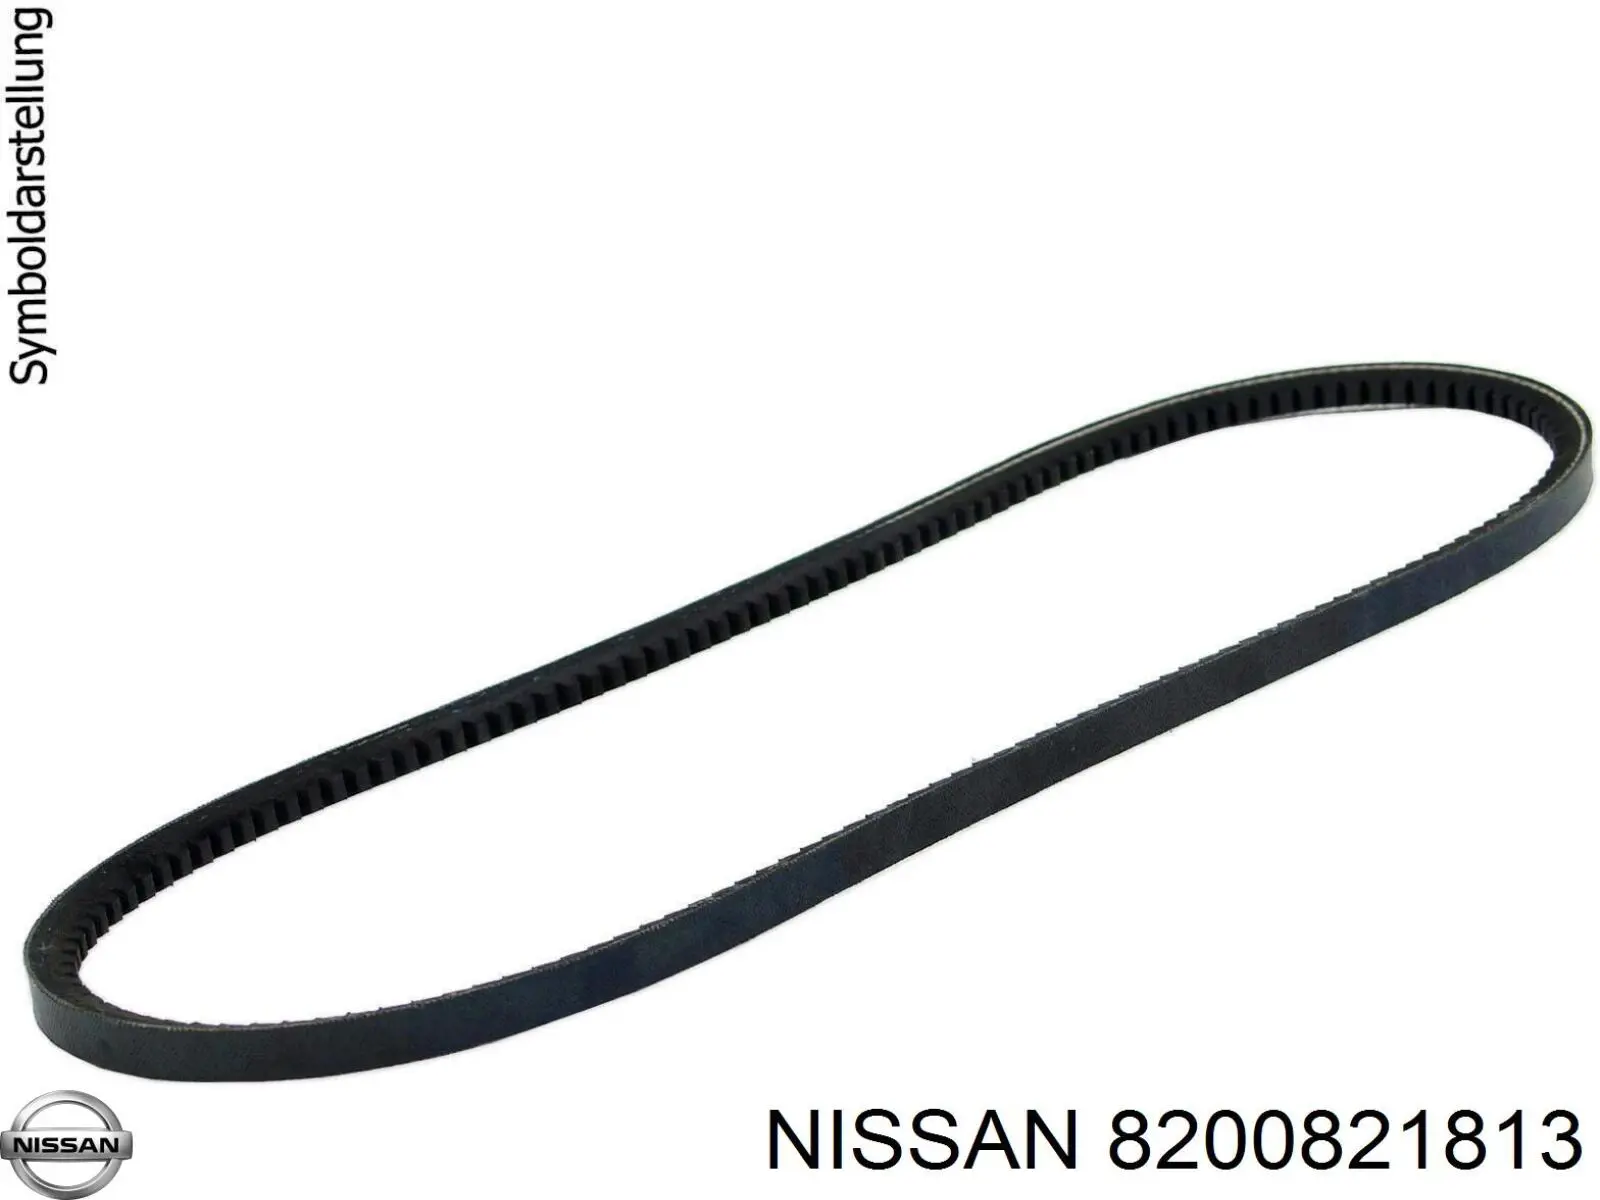 8200821813 Nissan correa trapezoidal